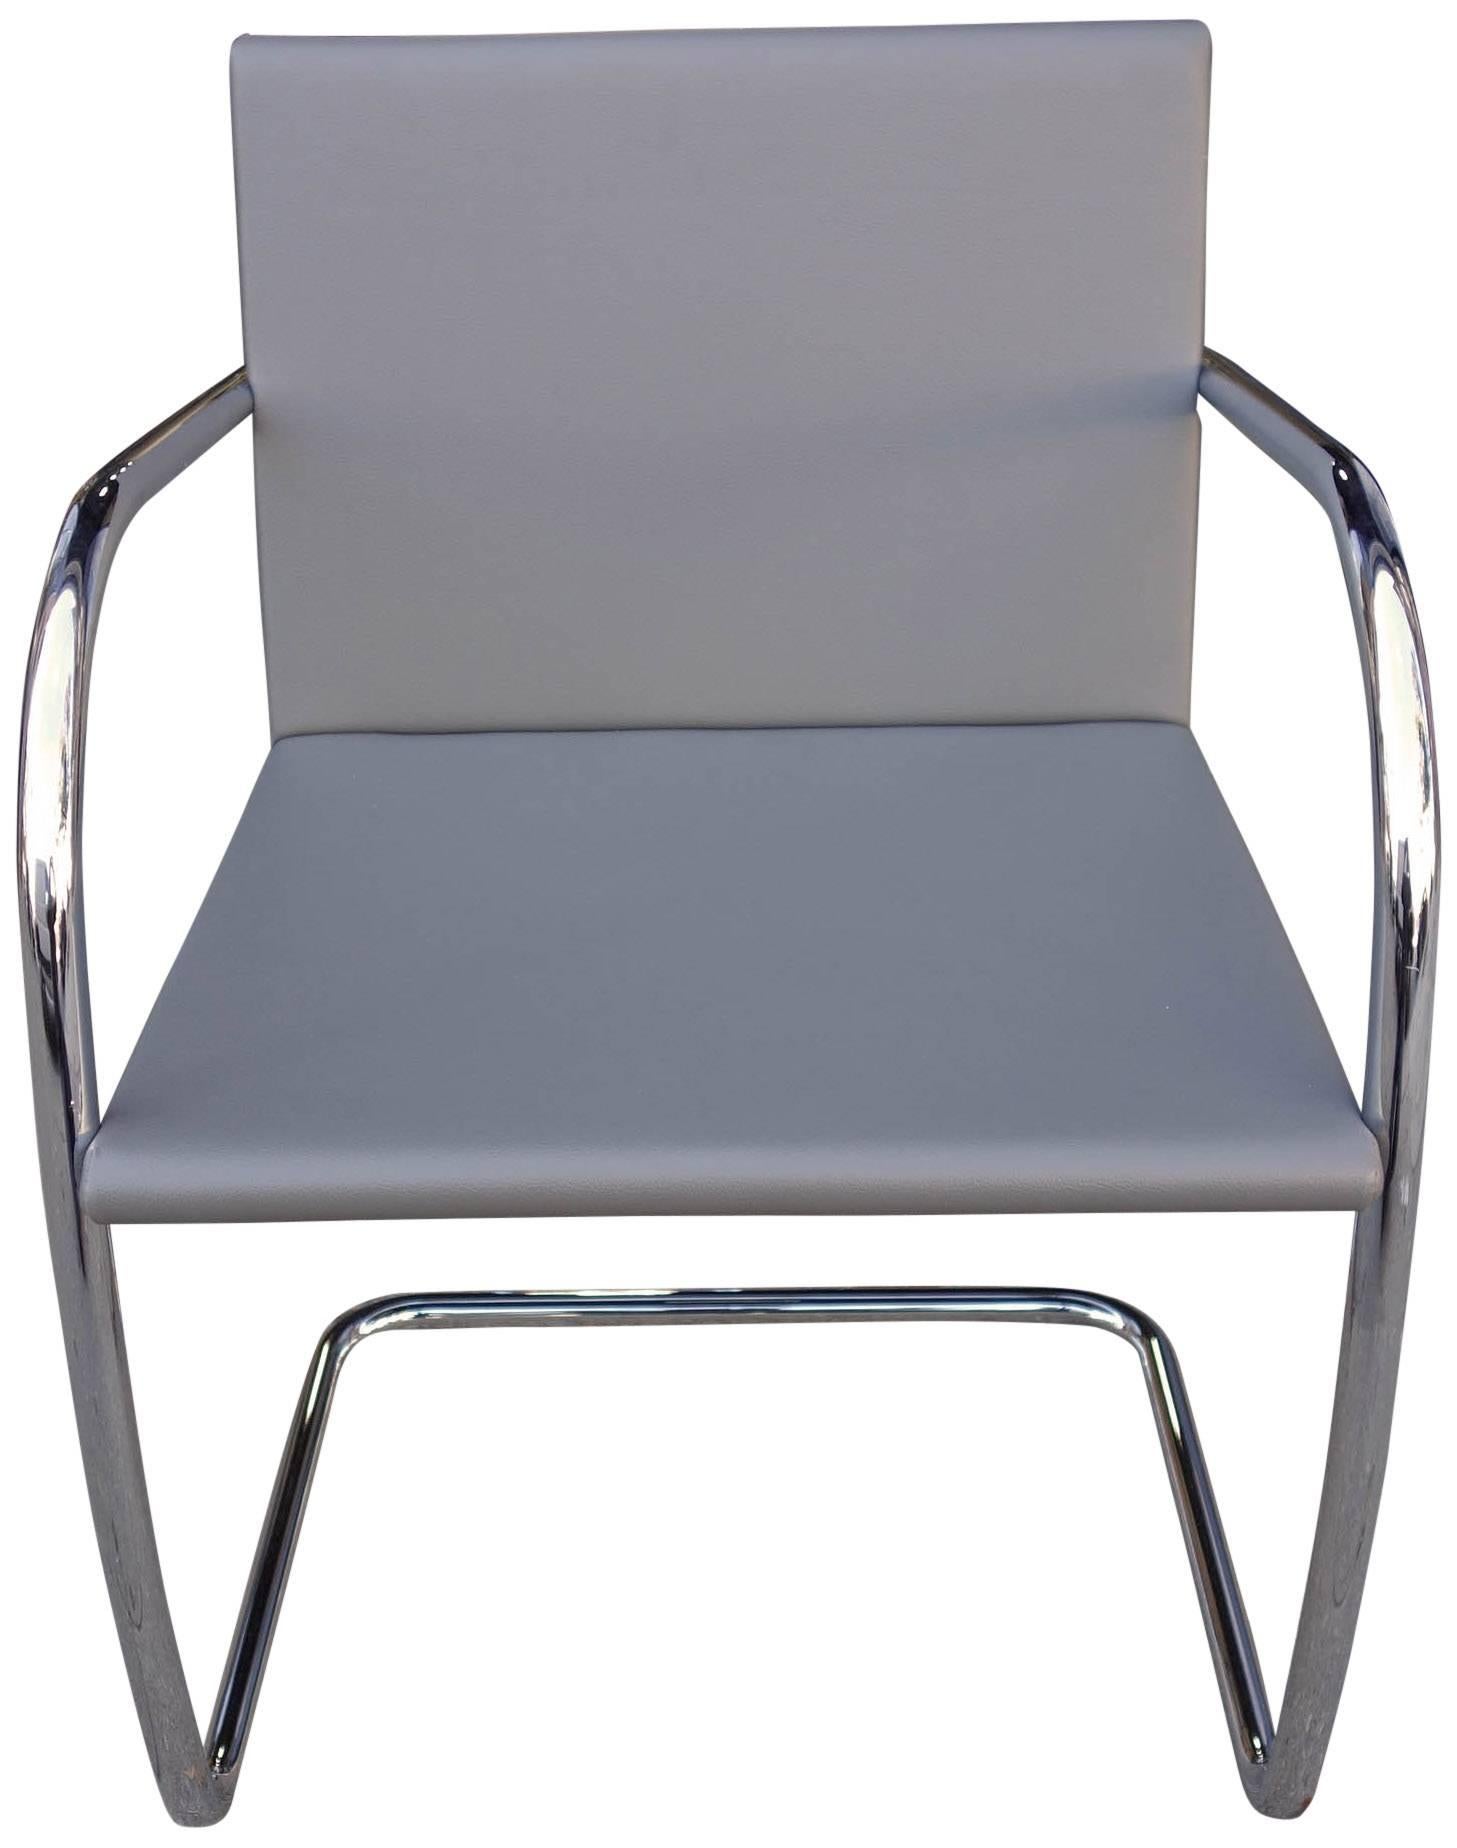 gordon international brno chair